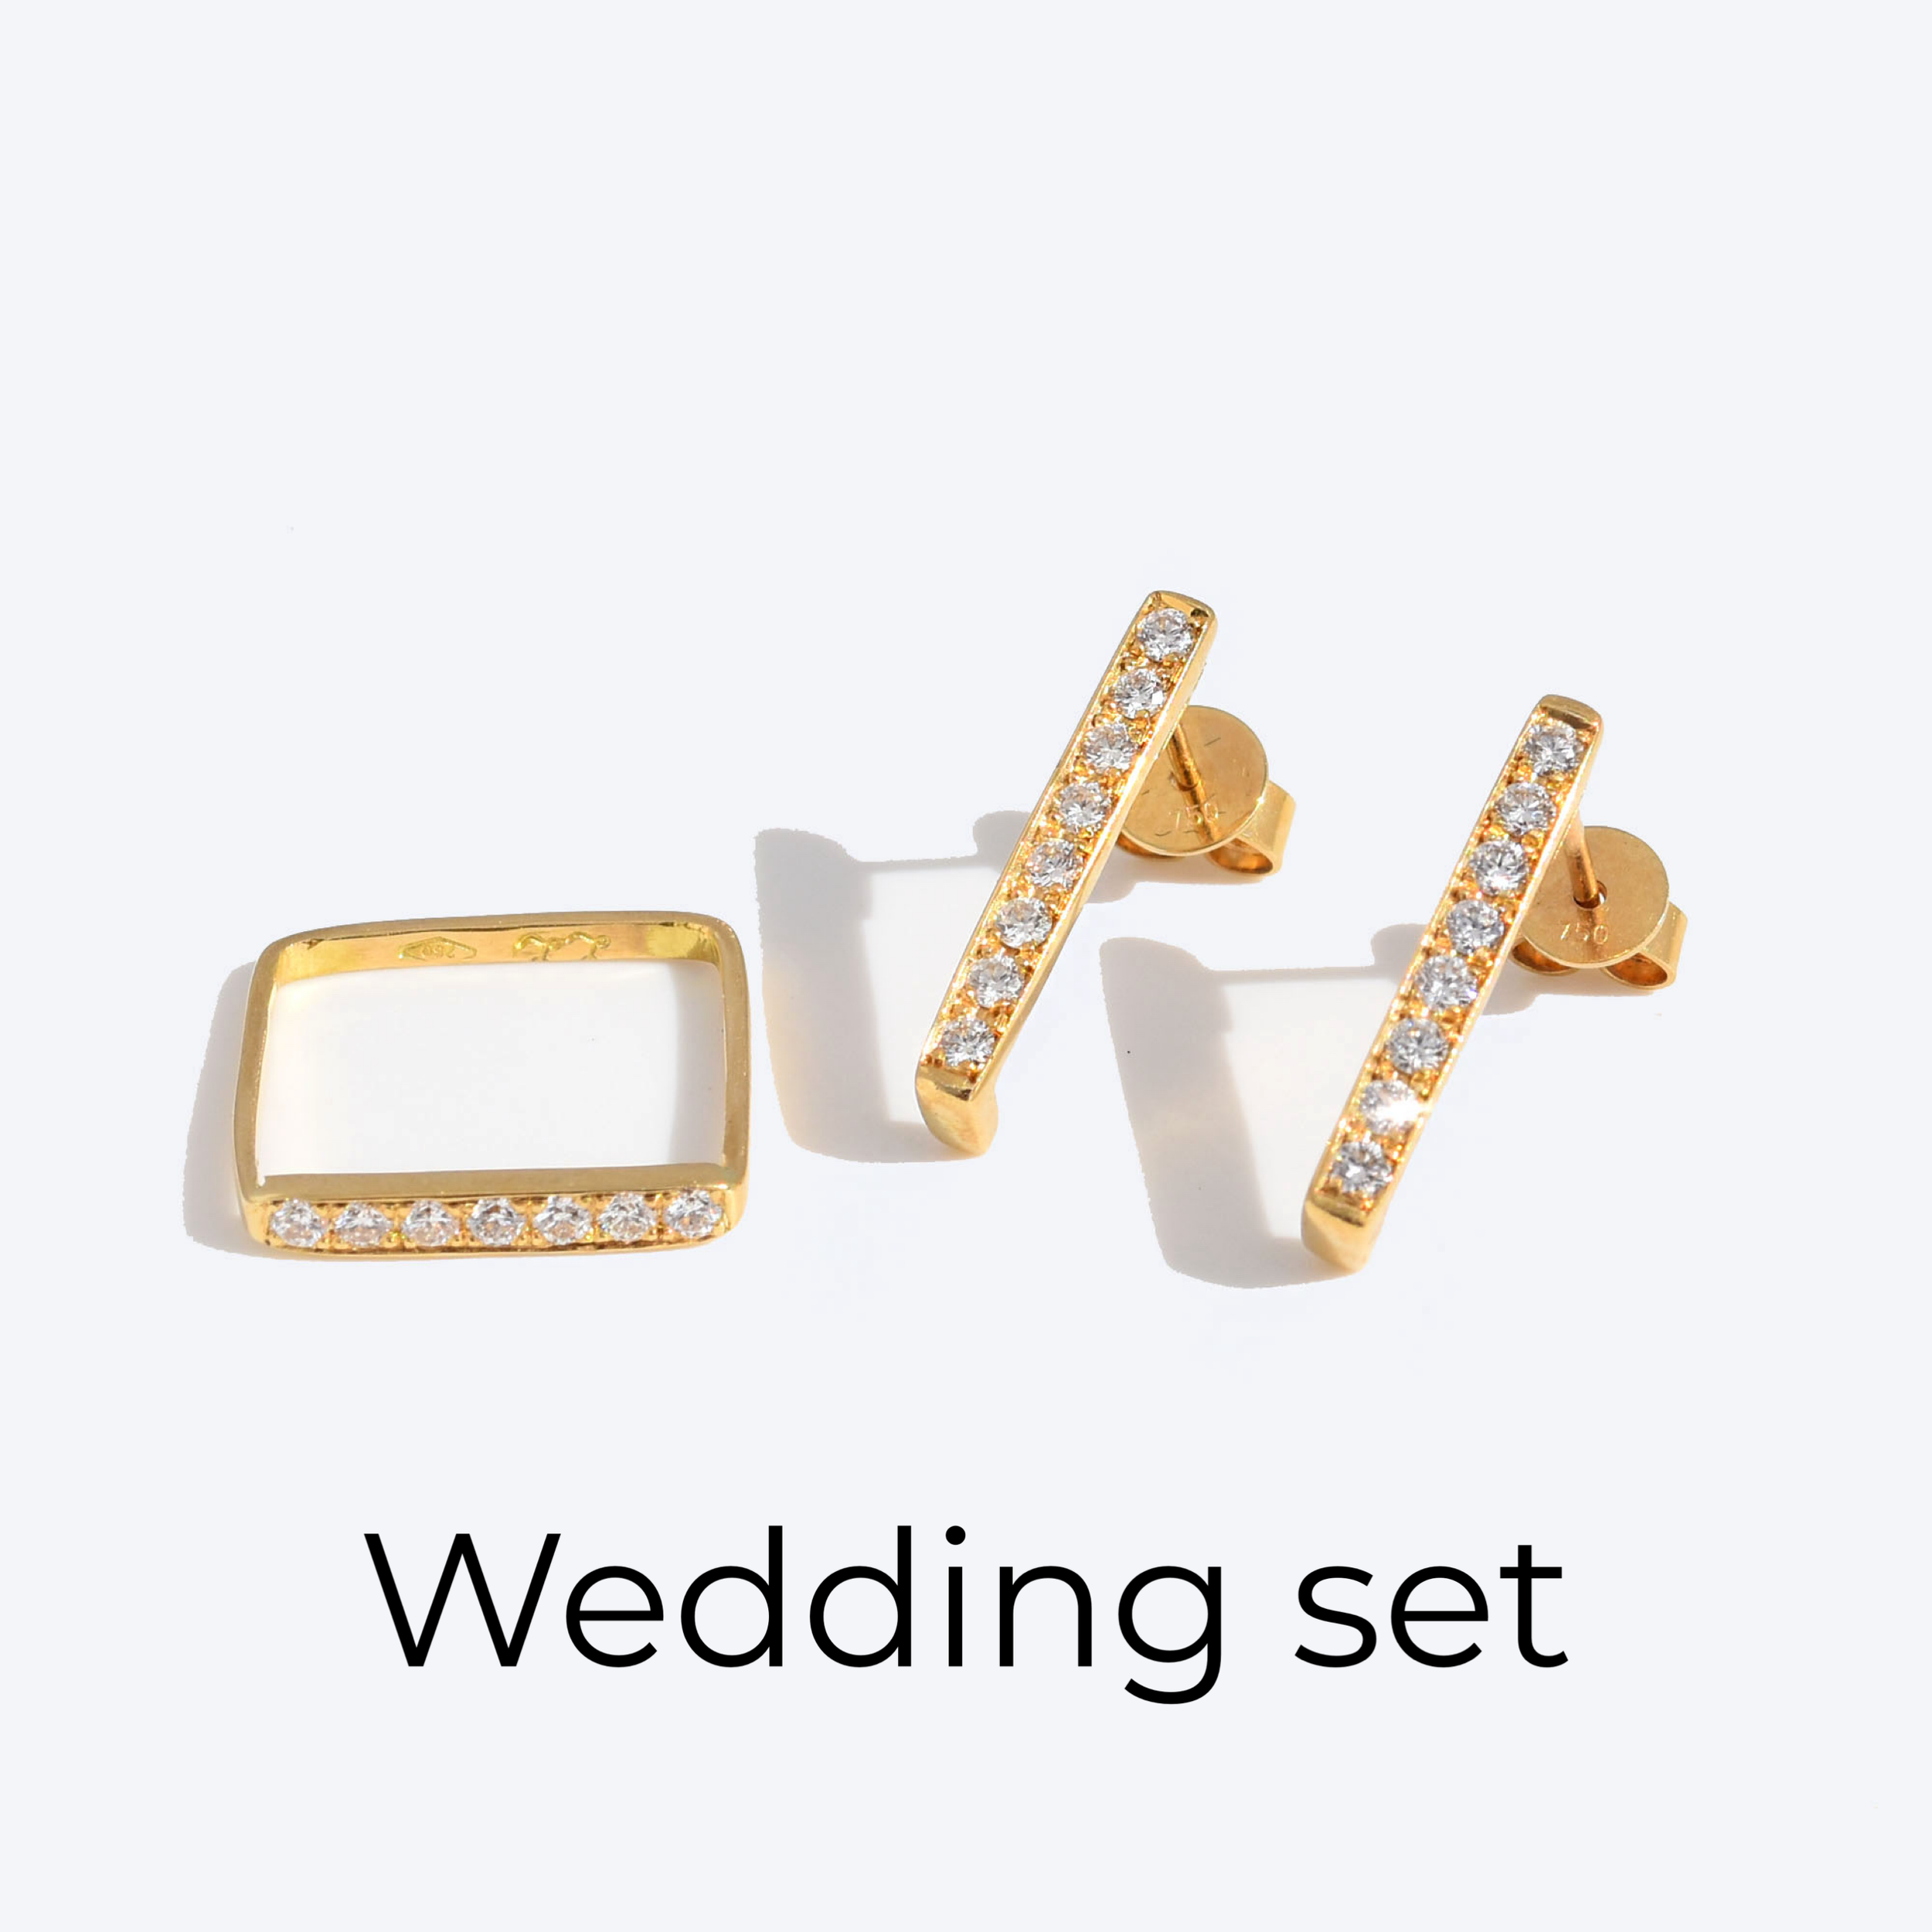 Wedding band and matching earrings